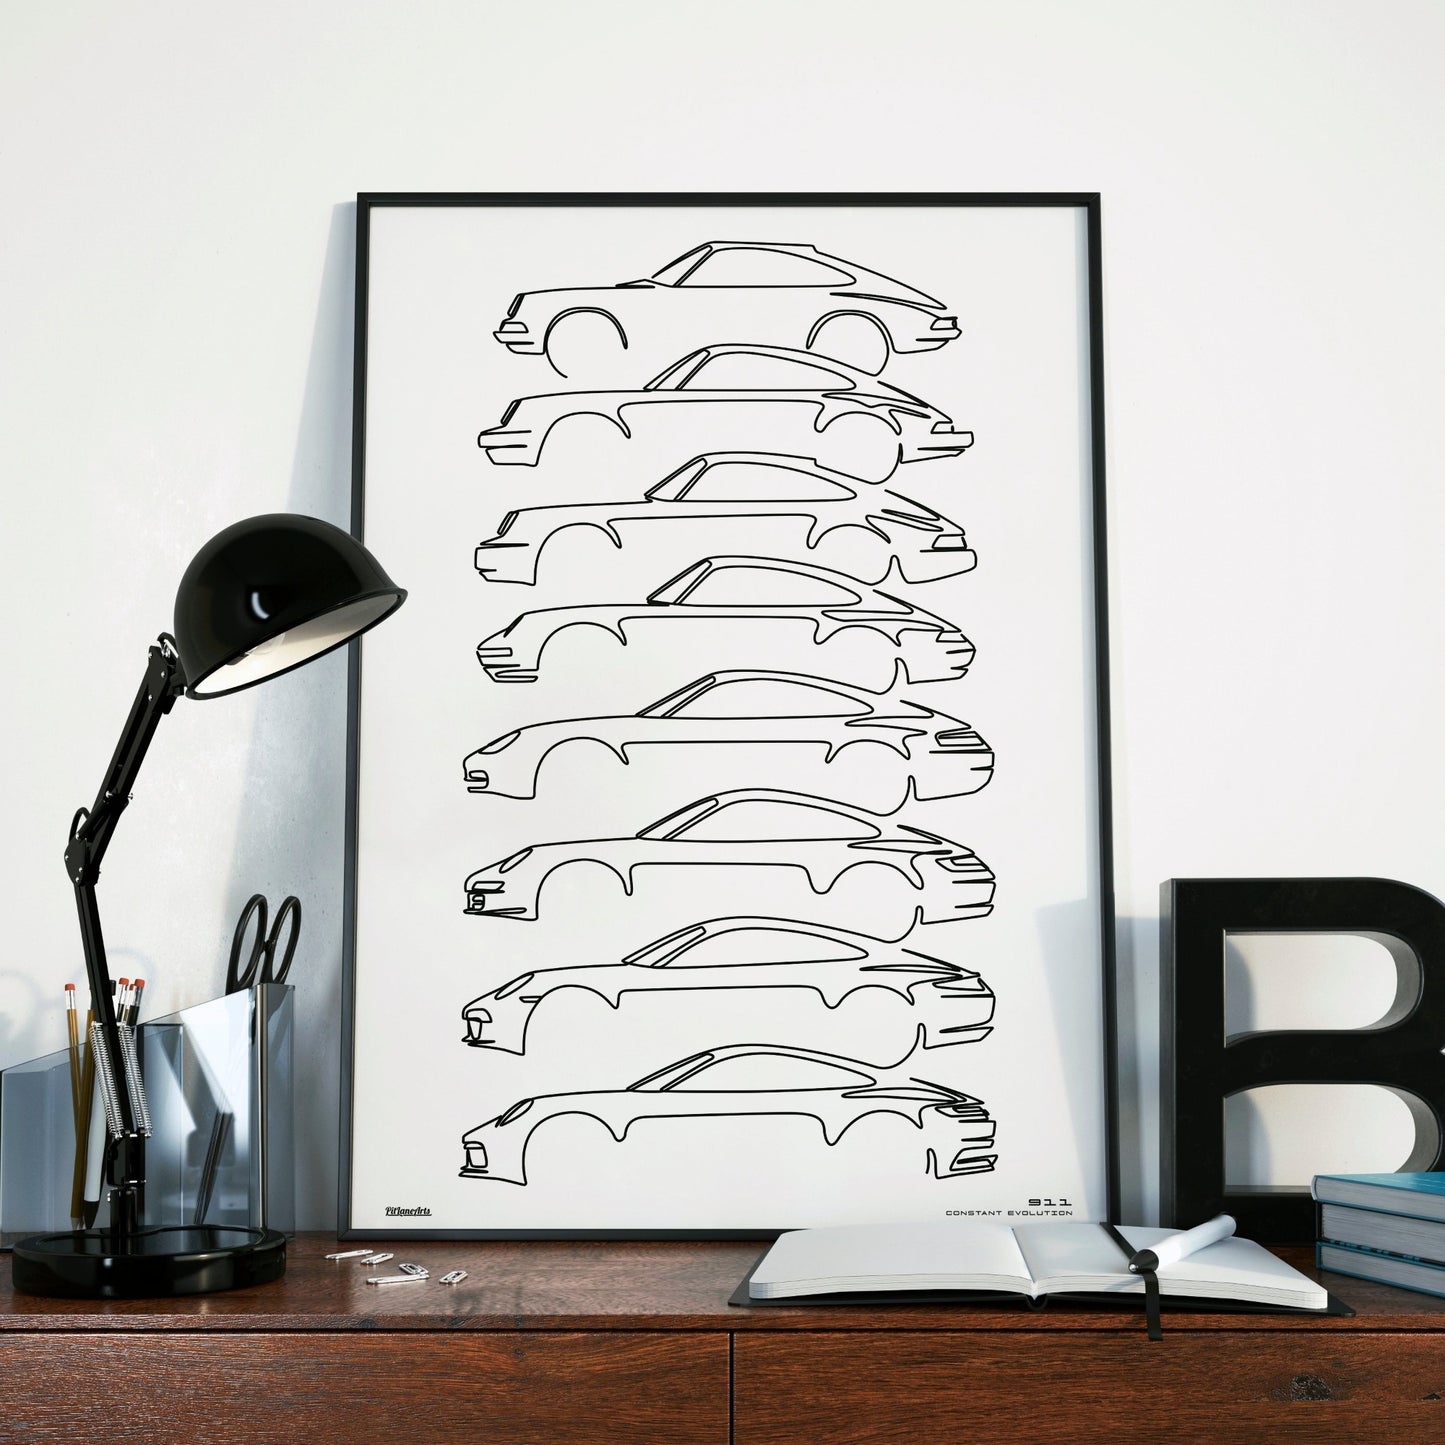 Porsche 911 evolution silhouettes